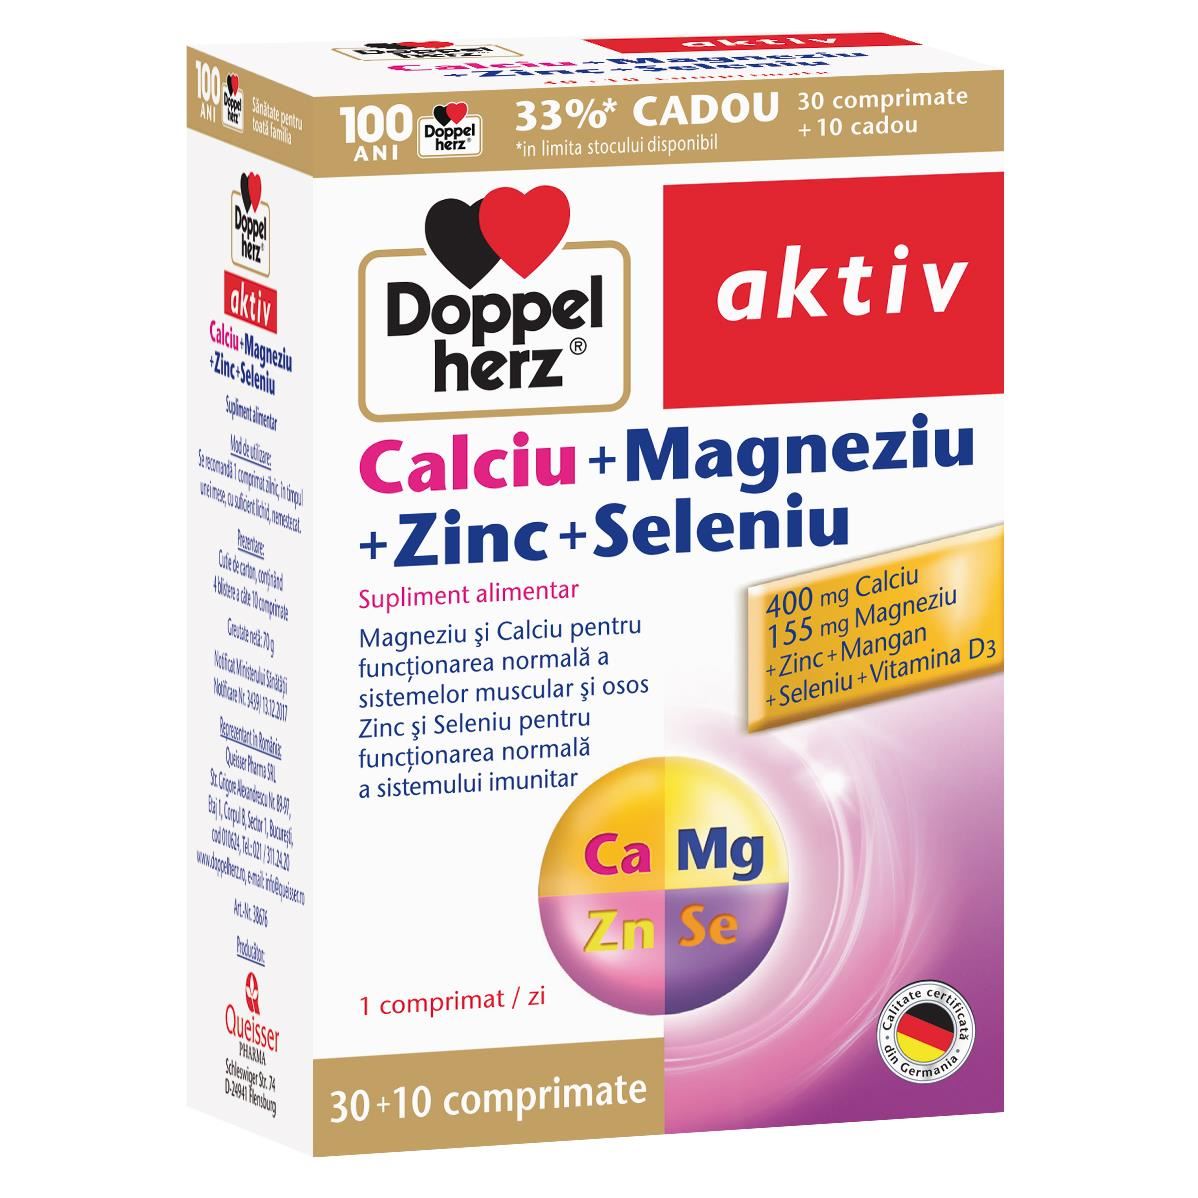 Tonice generale - Doppelherz aktiv ca+mg+zn+se ctx 30 comprimate +10comprimate gratis, farmacieieftina.ro